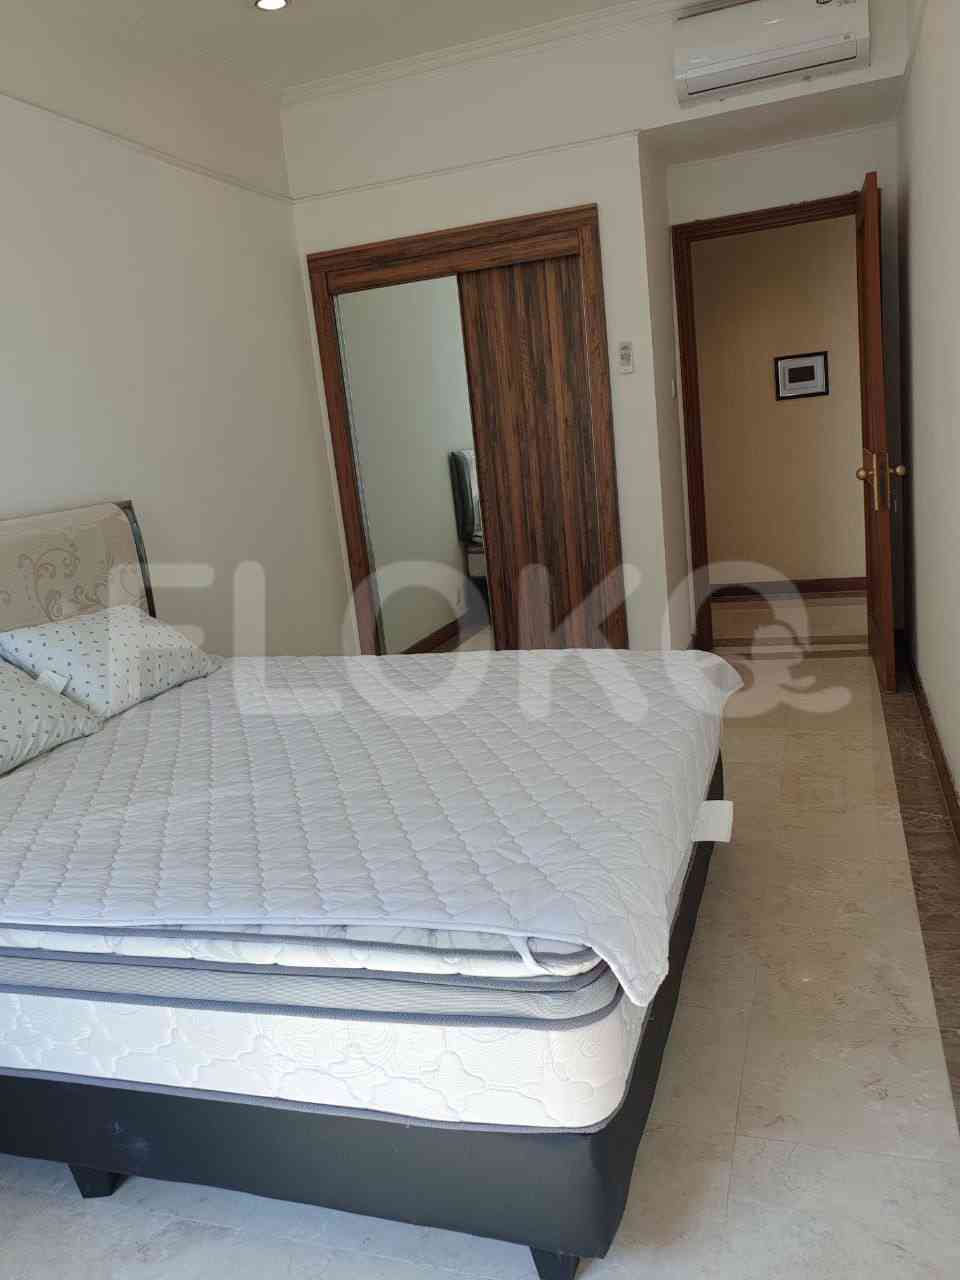 3 Bedroom on 15th Floor for Rent in Casablanca Apartment - ftebc2 13